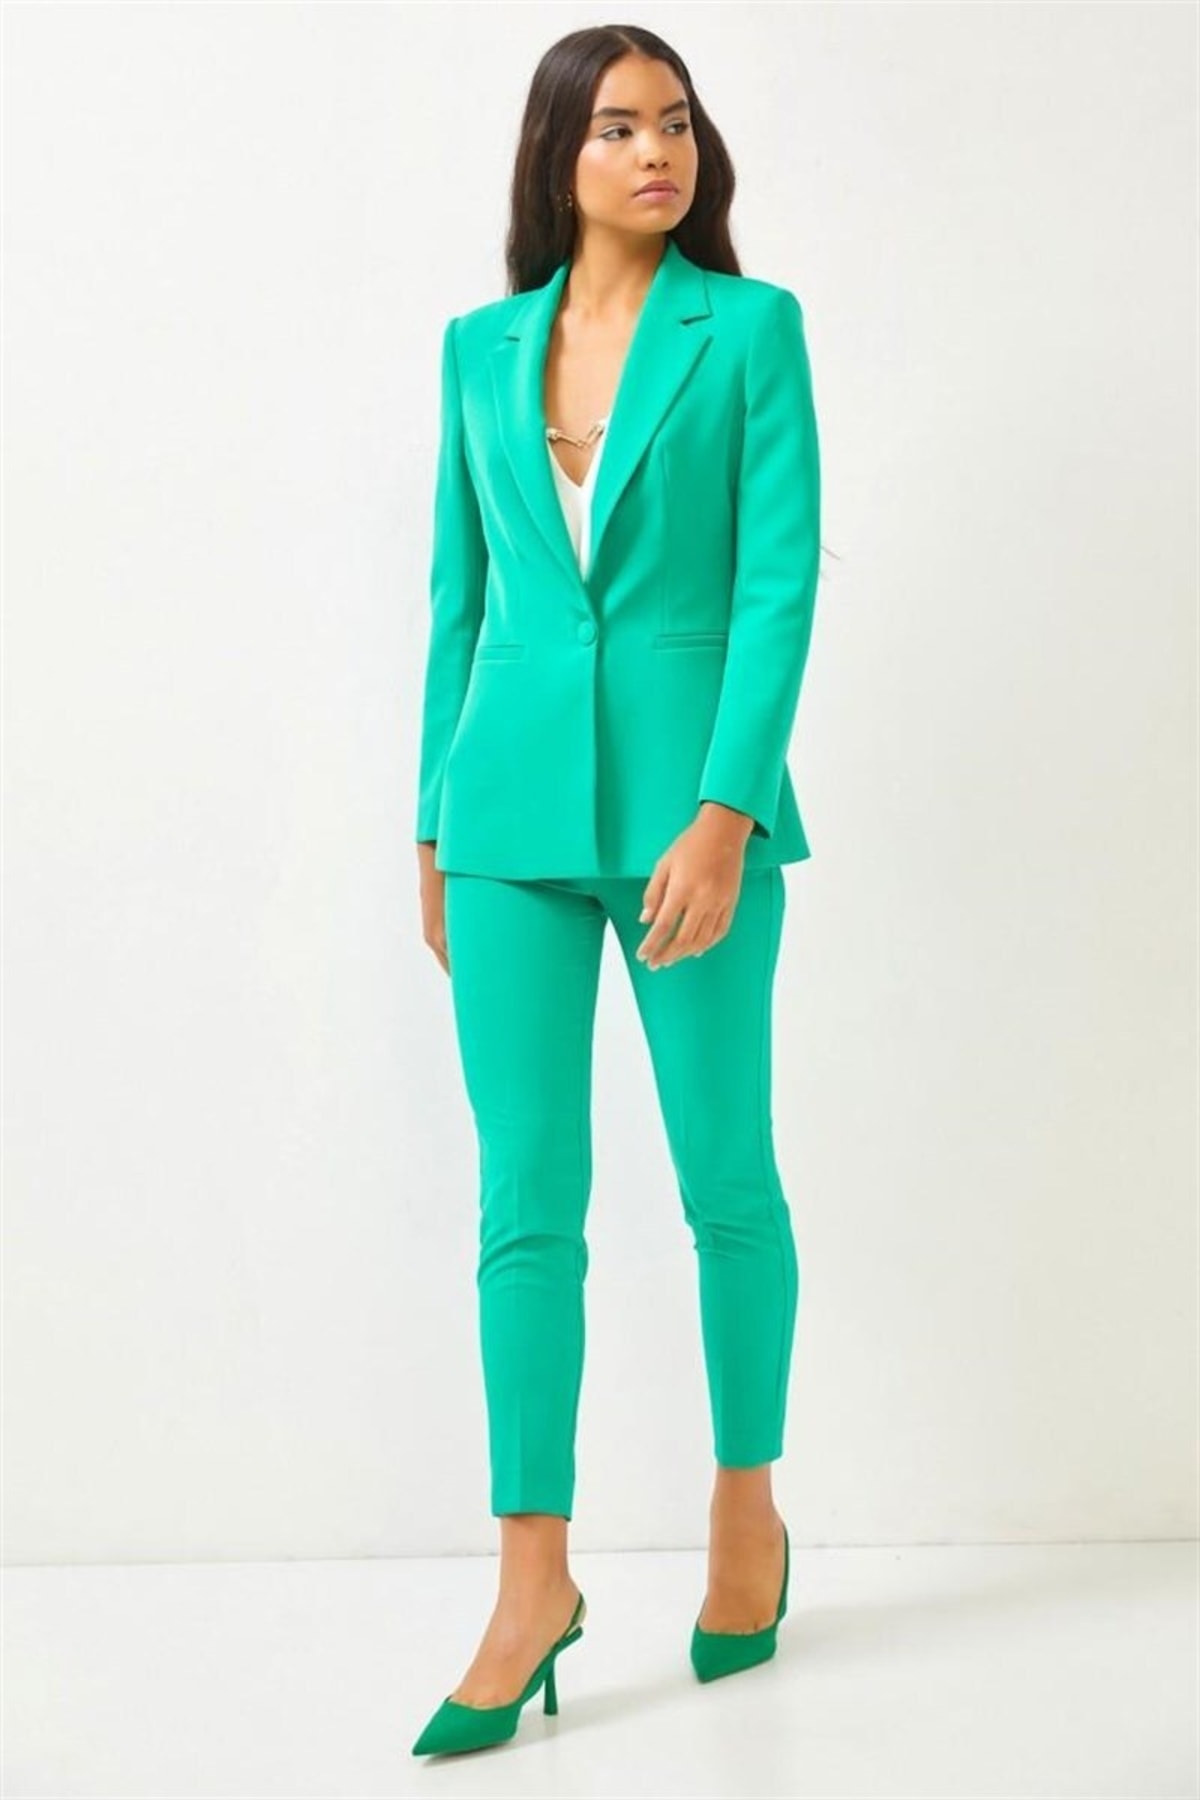 discount 86% Zara blazer WOMEN FASHION Jackets Leatherette Green S 